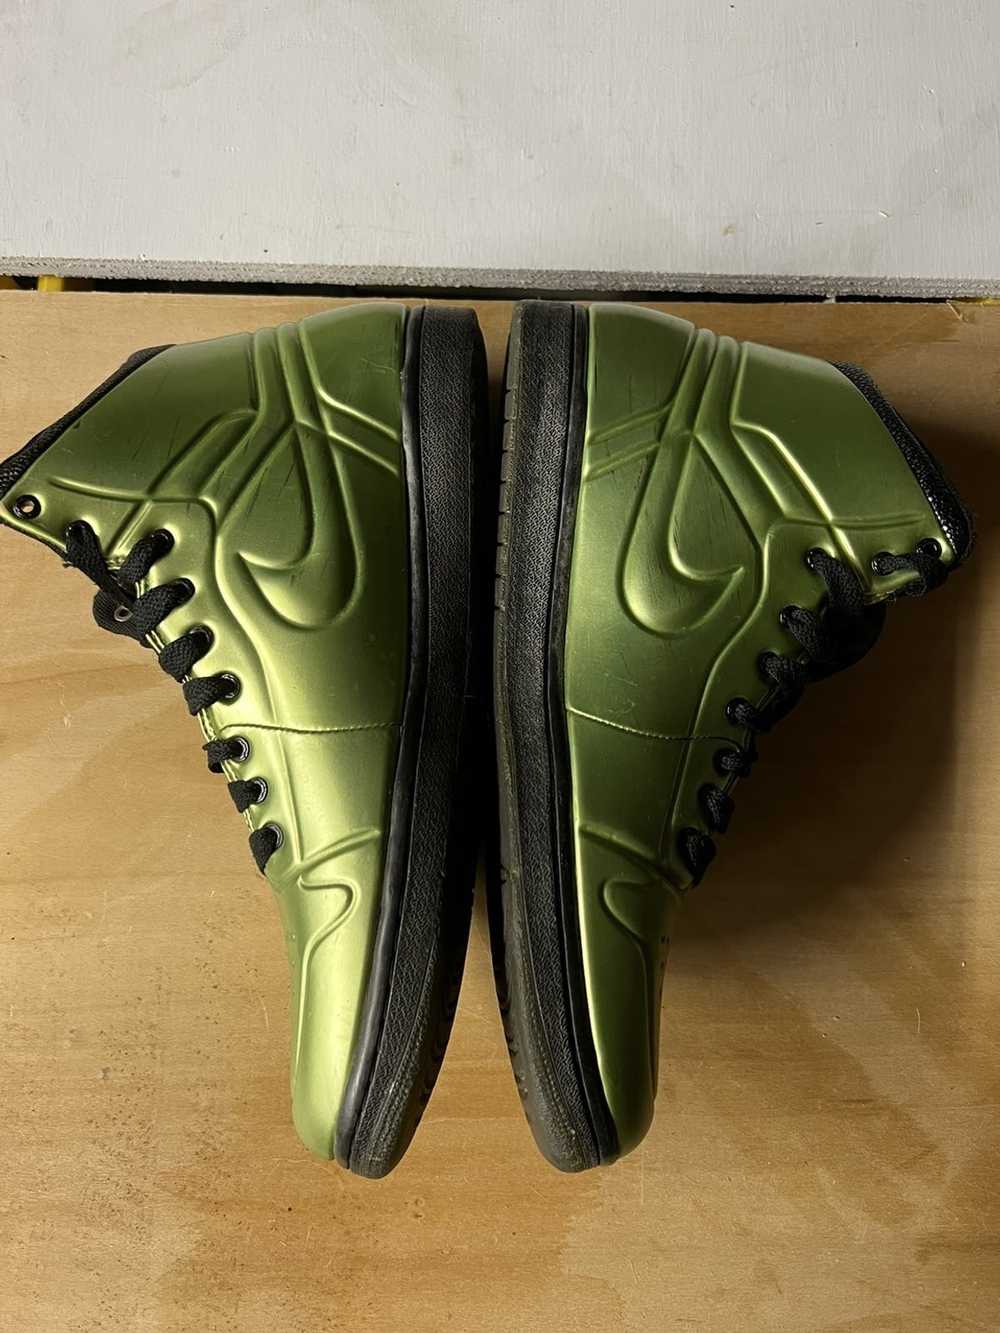 Jordan Brand Air Jordan 1 anondized ‘green’ - image 3